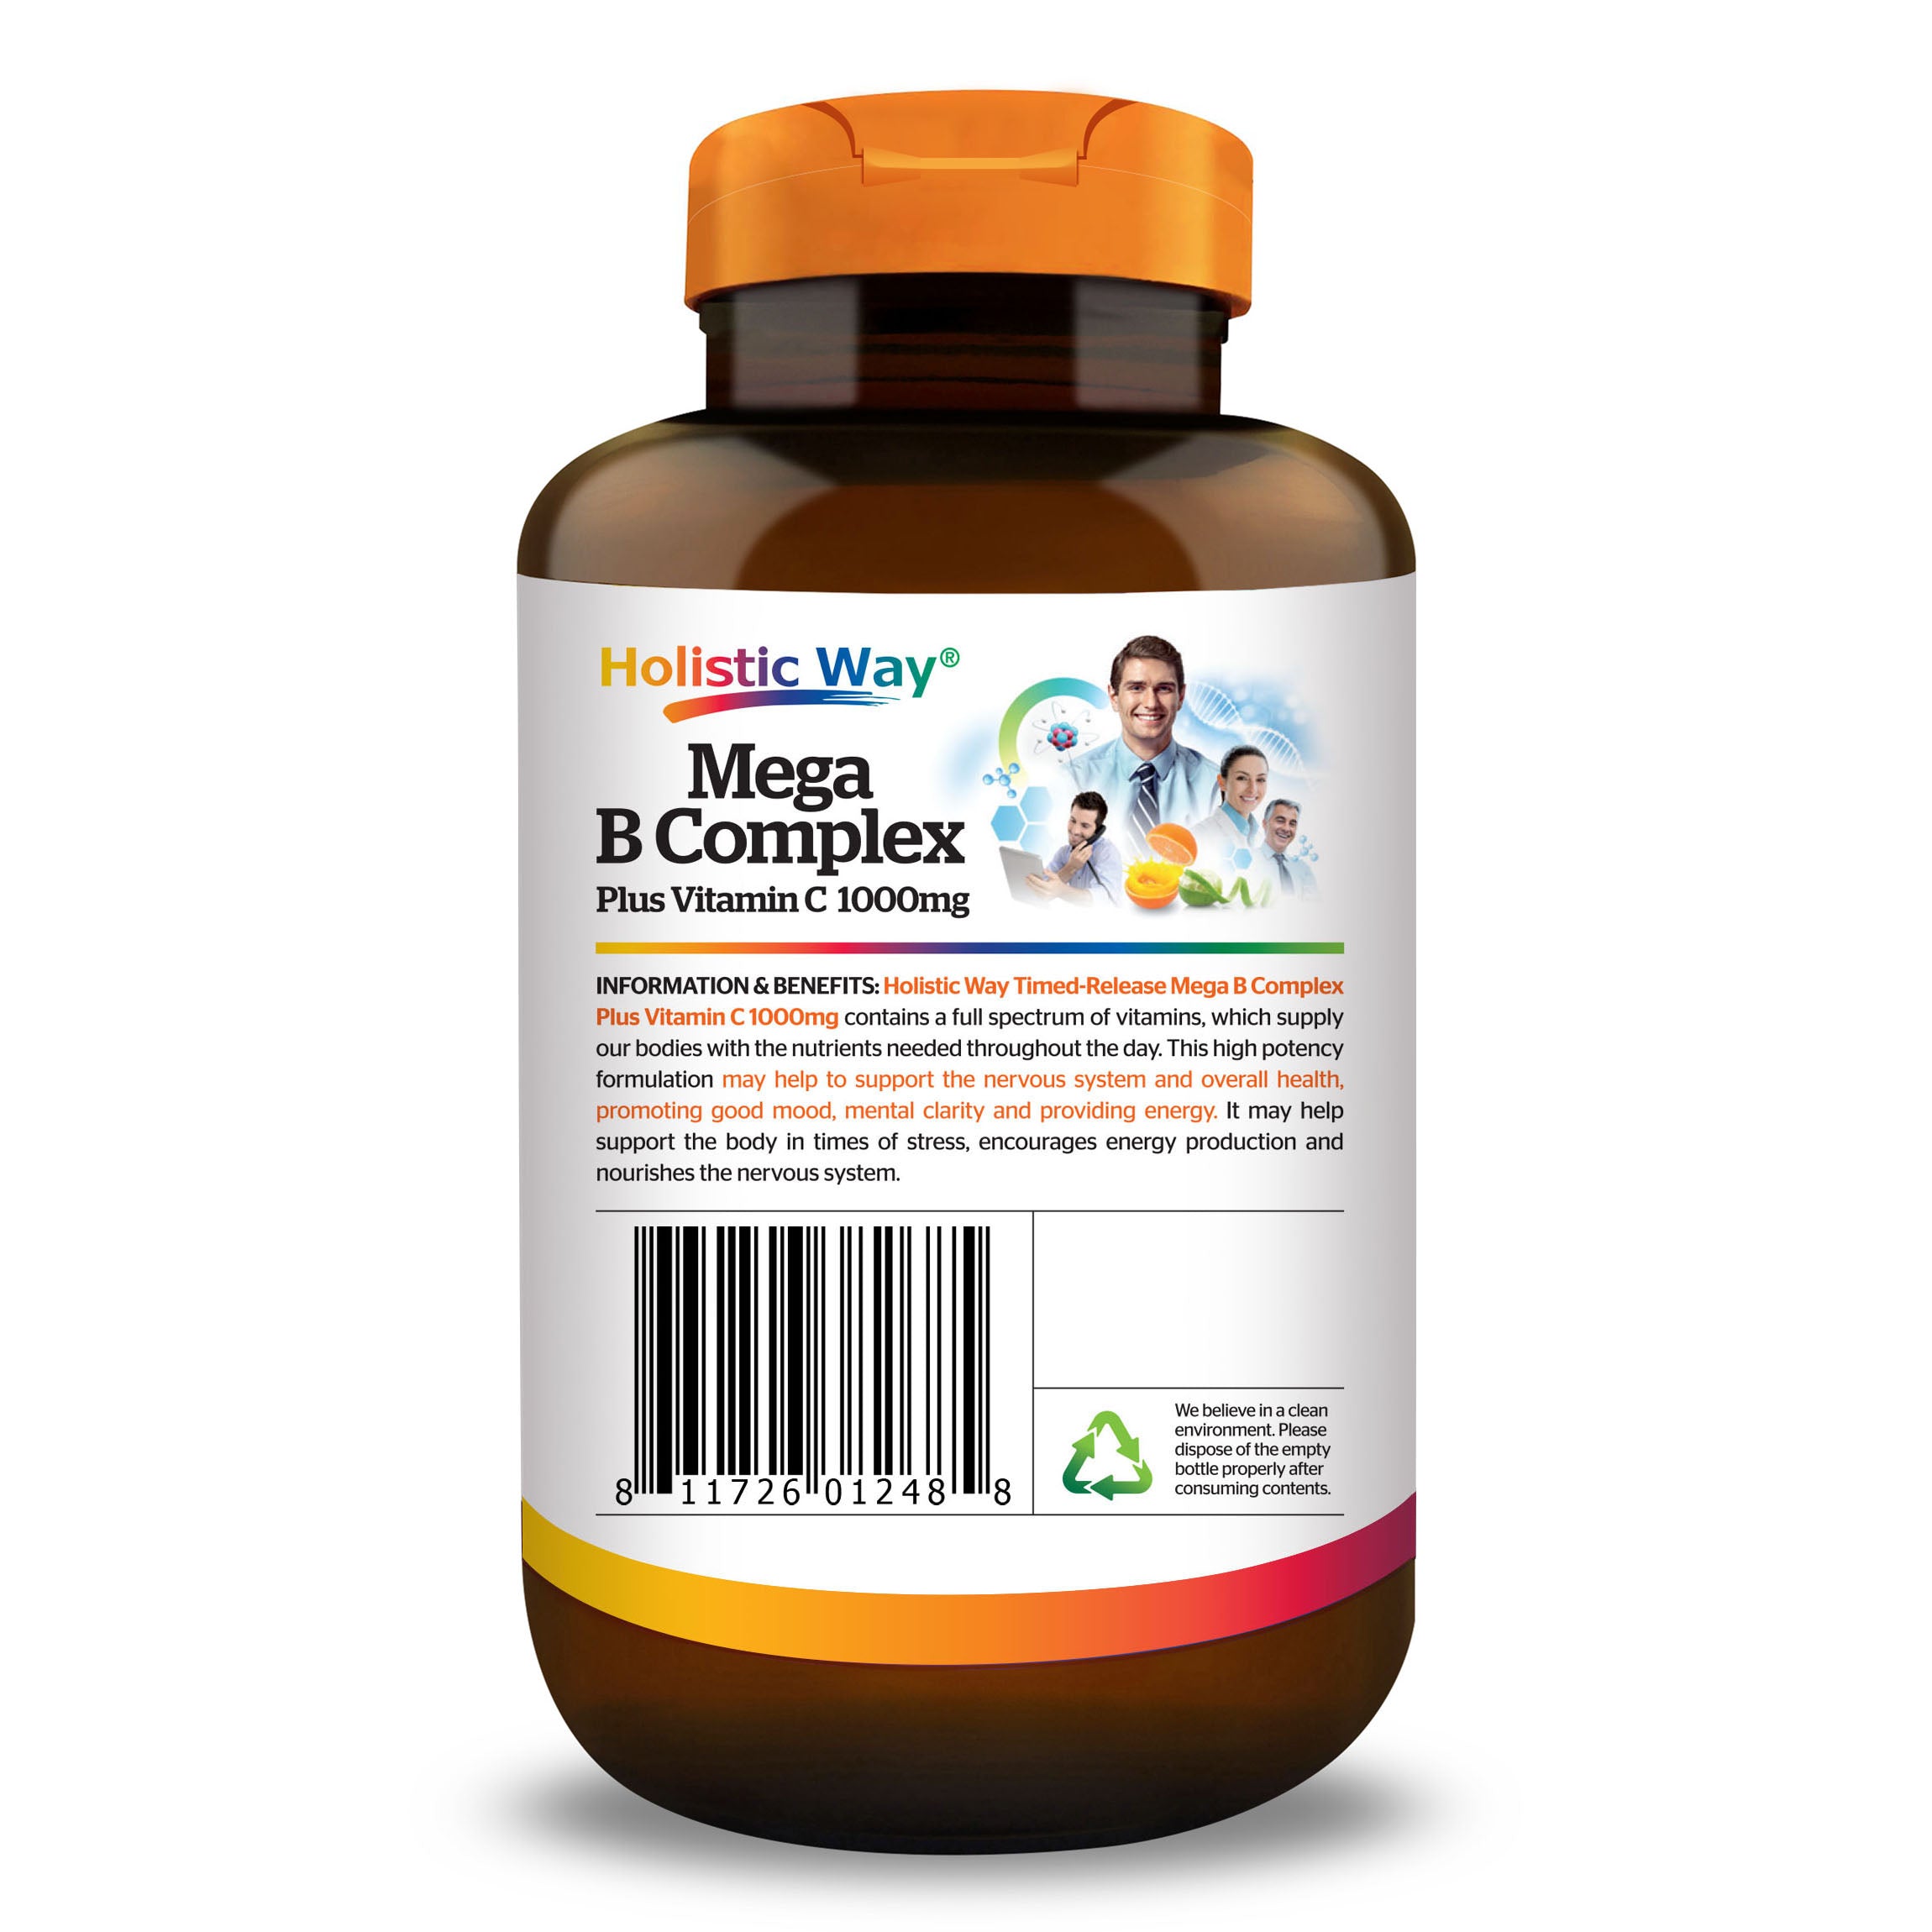 Holistic Way Mega B Complex Plus Vitamin C 1000mg (60 Tablets)